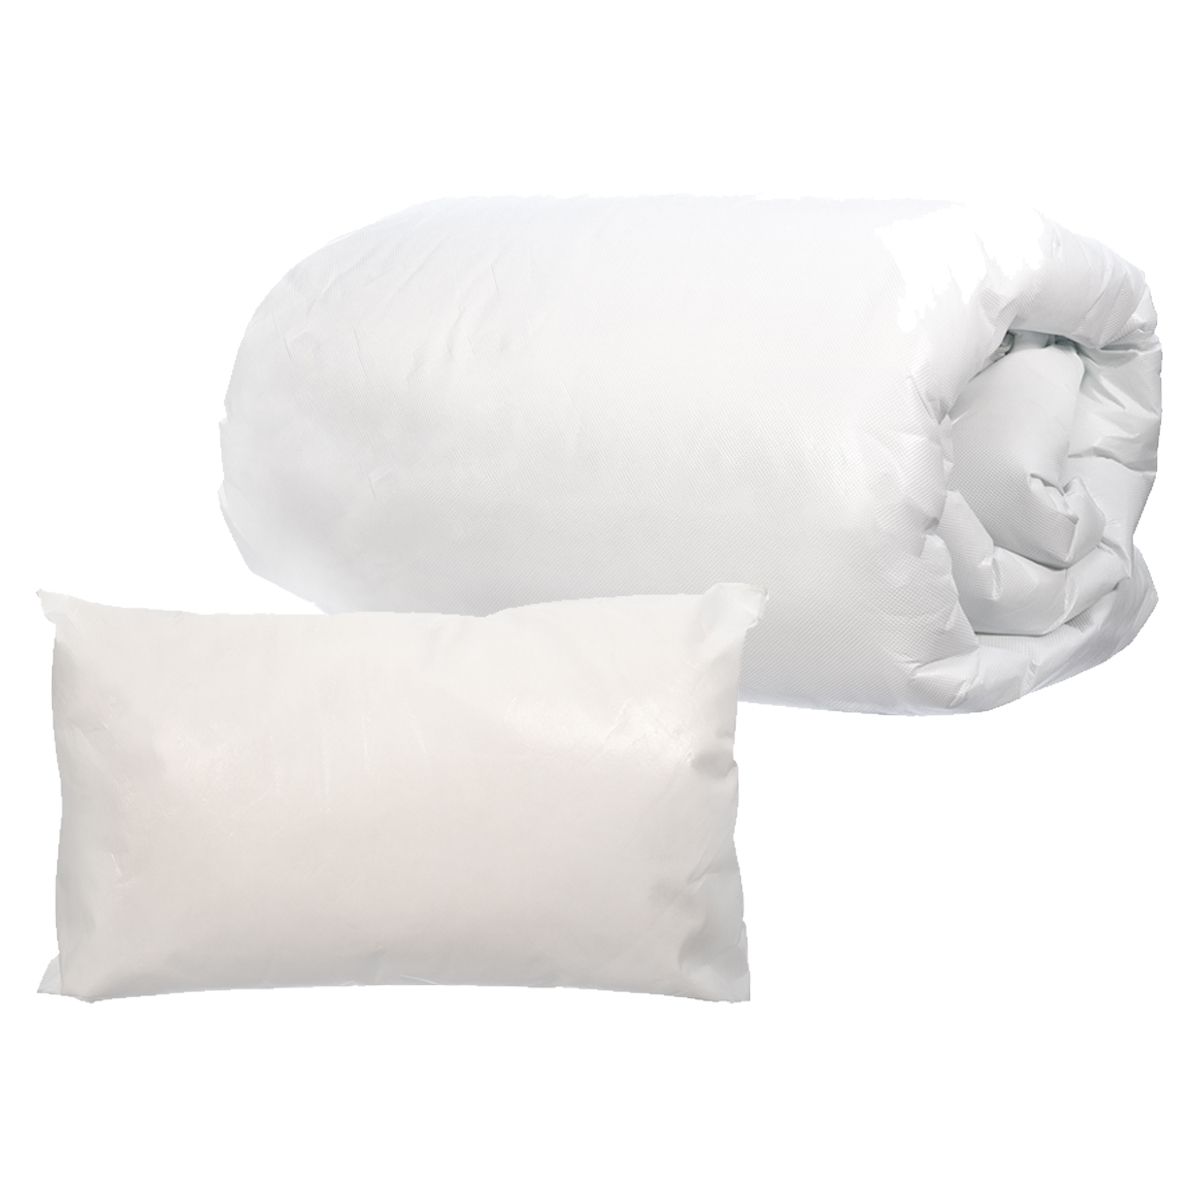 Vivactive Waterproof Pillow Single Duvet Set 10 5 Tog